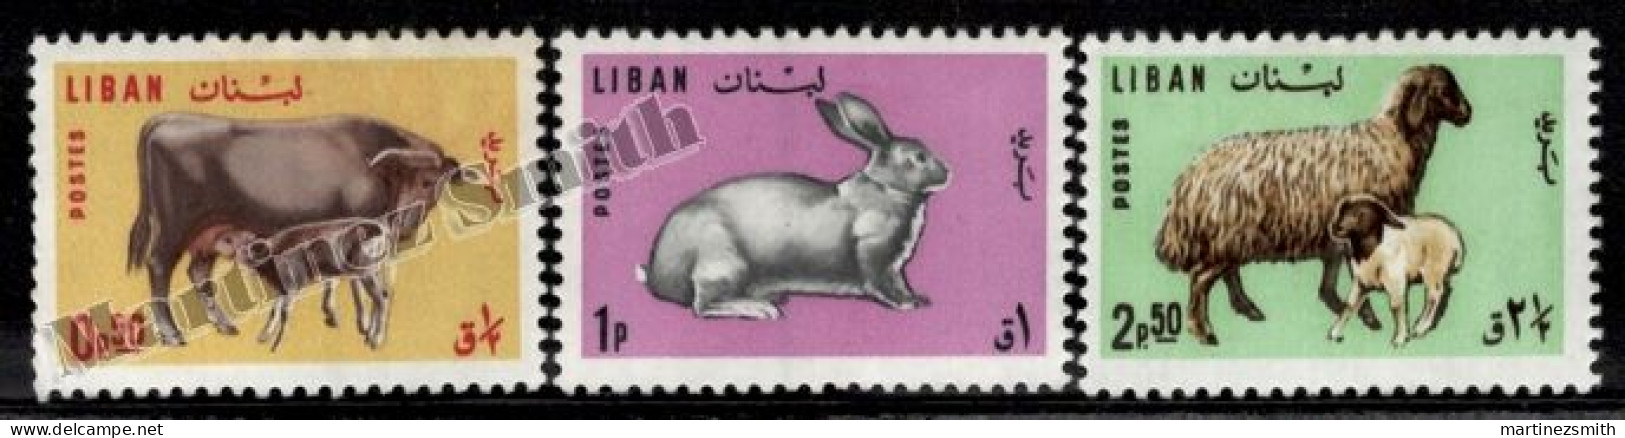 Liban 1965 Yvert 256-58, Fauna, Livestock, Farm Animals  - MNH - Liban